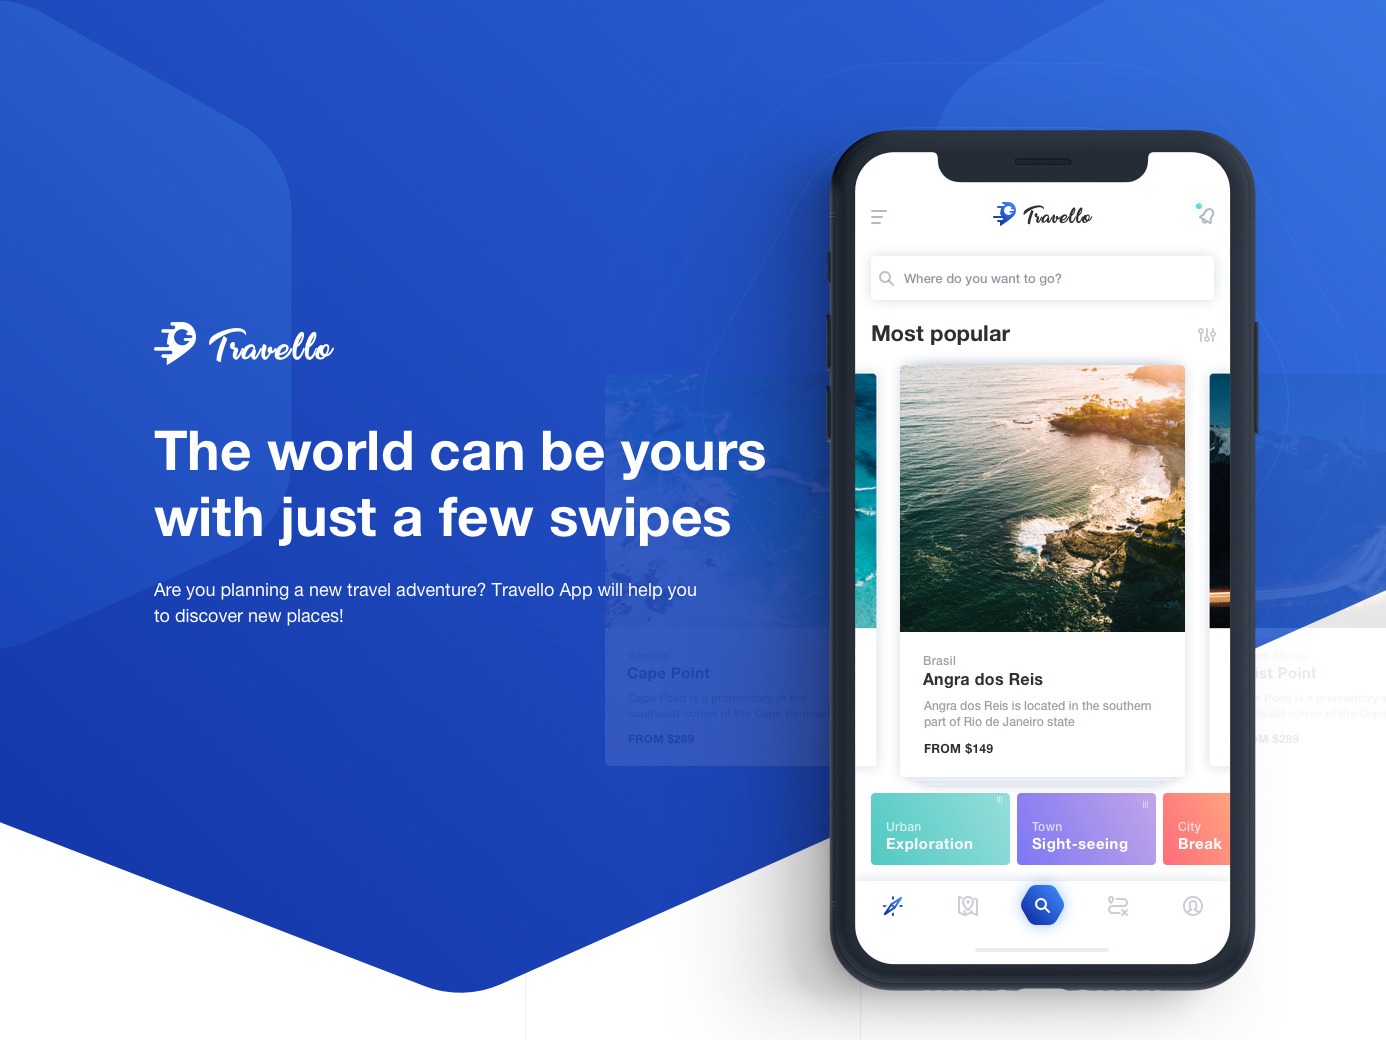 Travello App Concept - Plan a new travel adventur